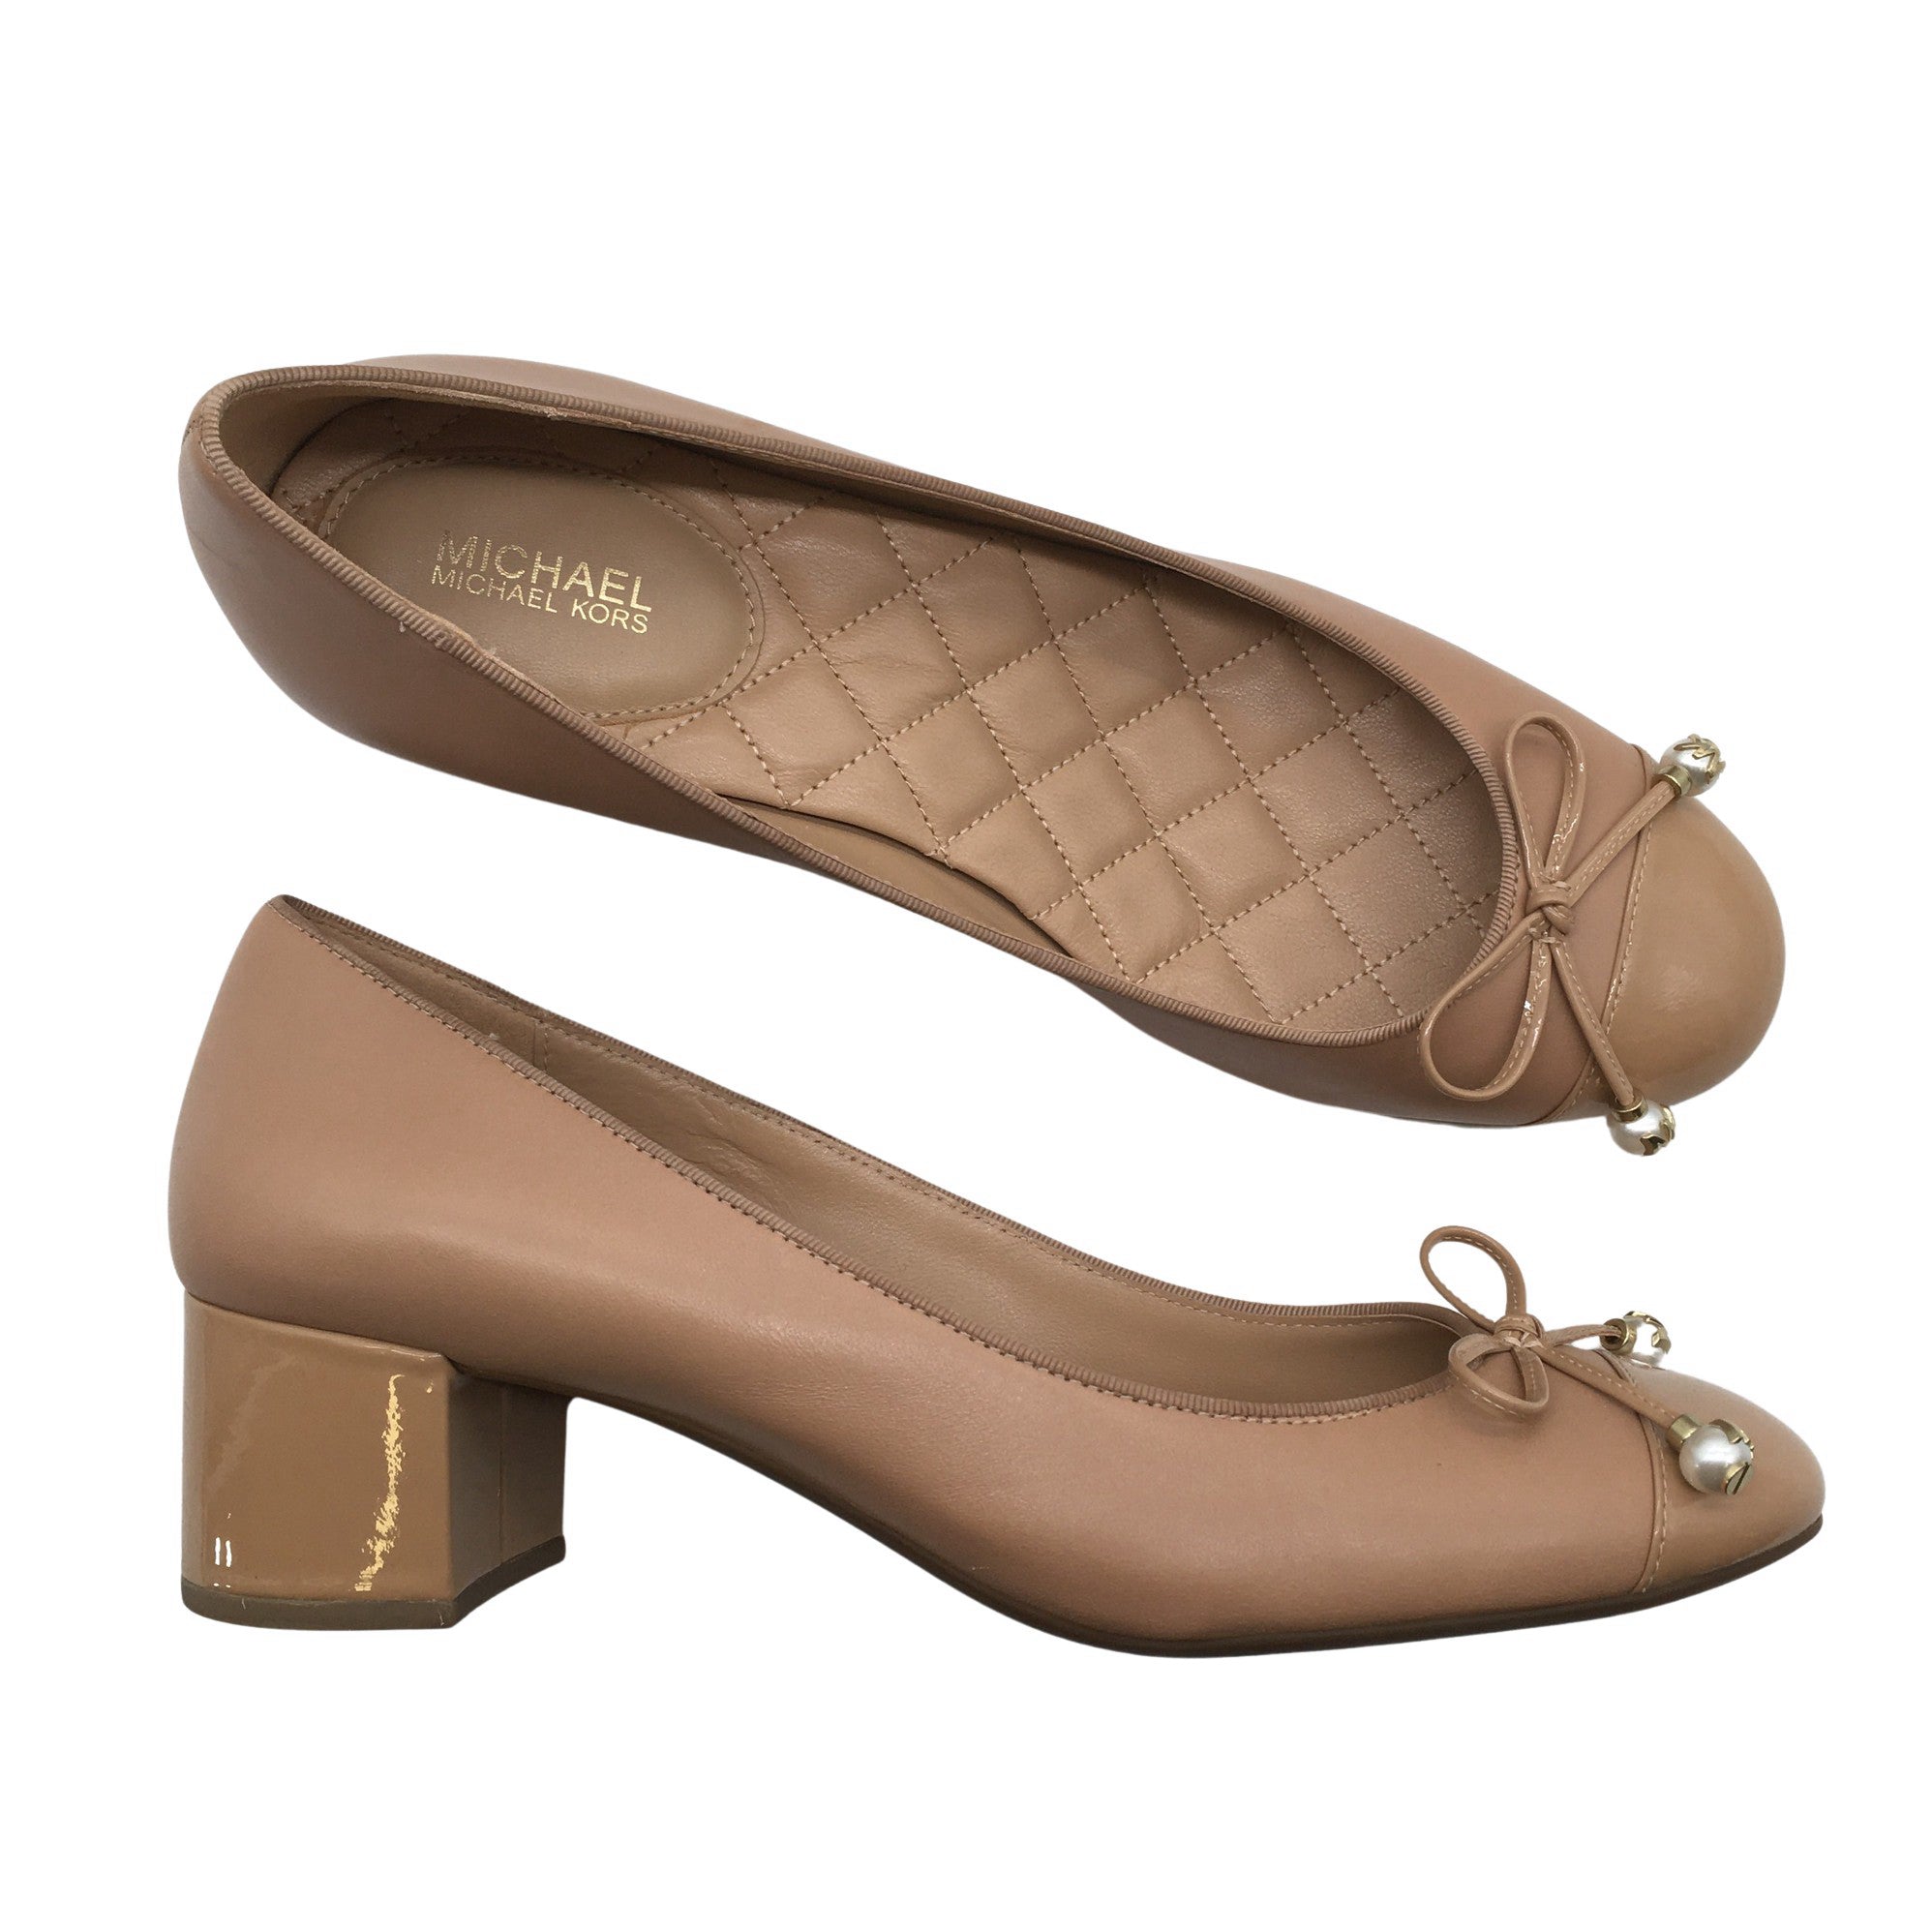 Women's Michael Kors High heels, size 40 (Beige) | Emmy